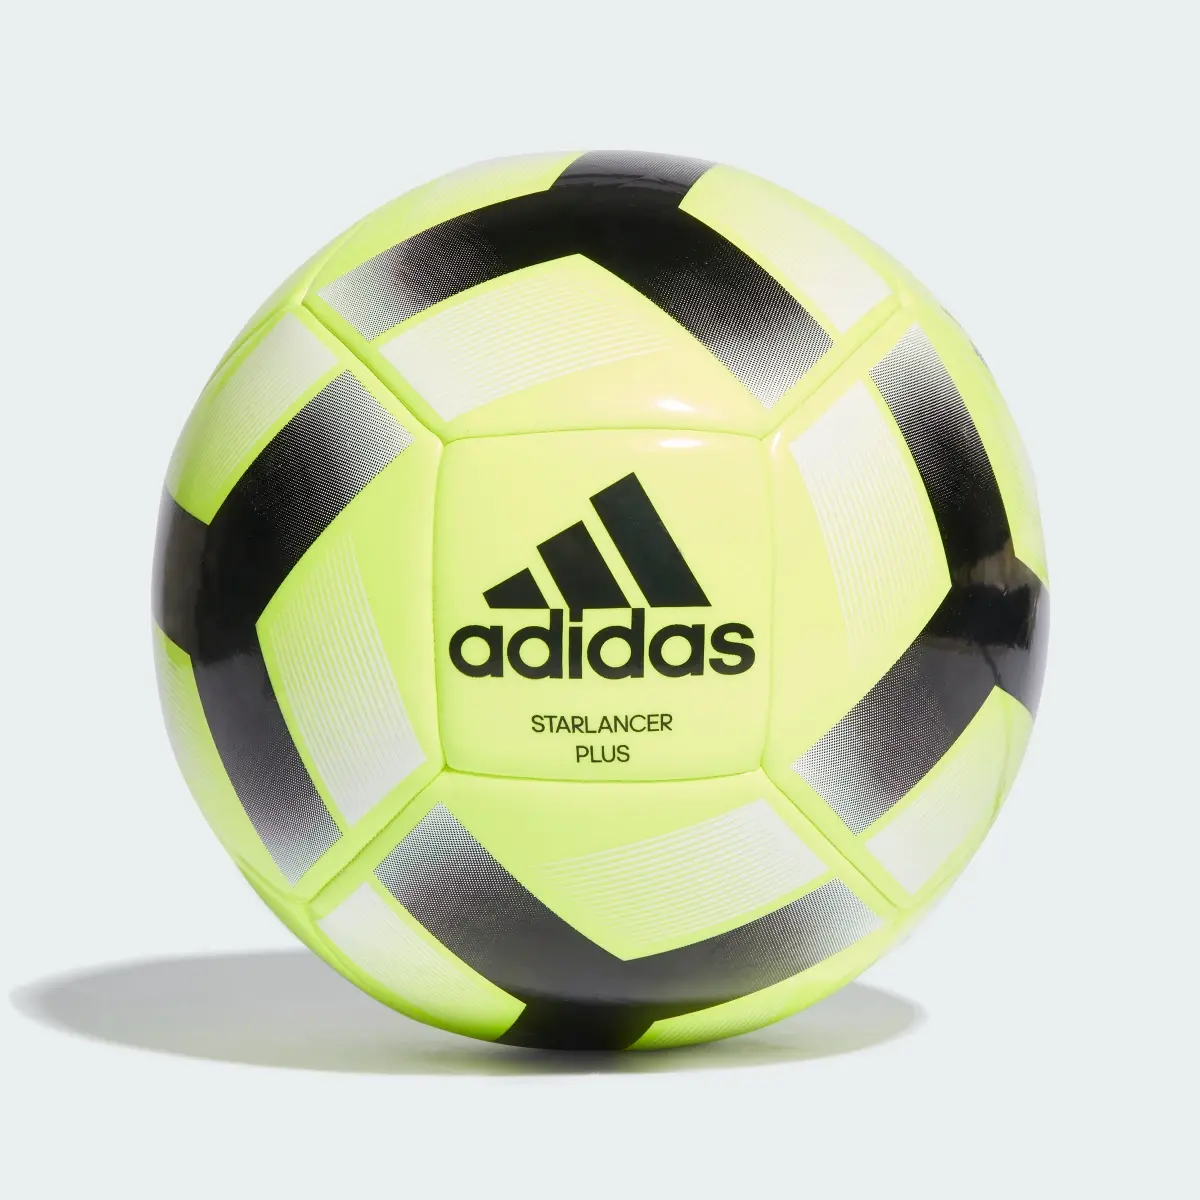 Adidas Starlancer Plus Football. 3